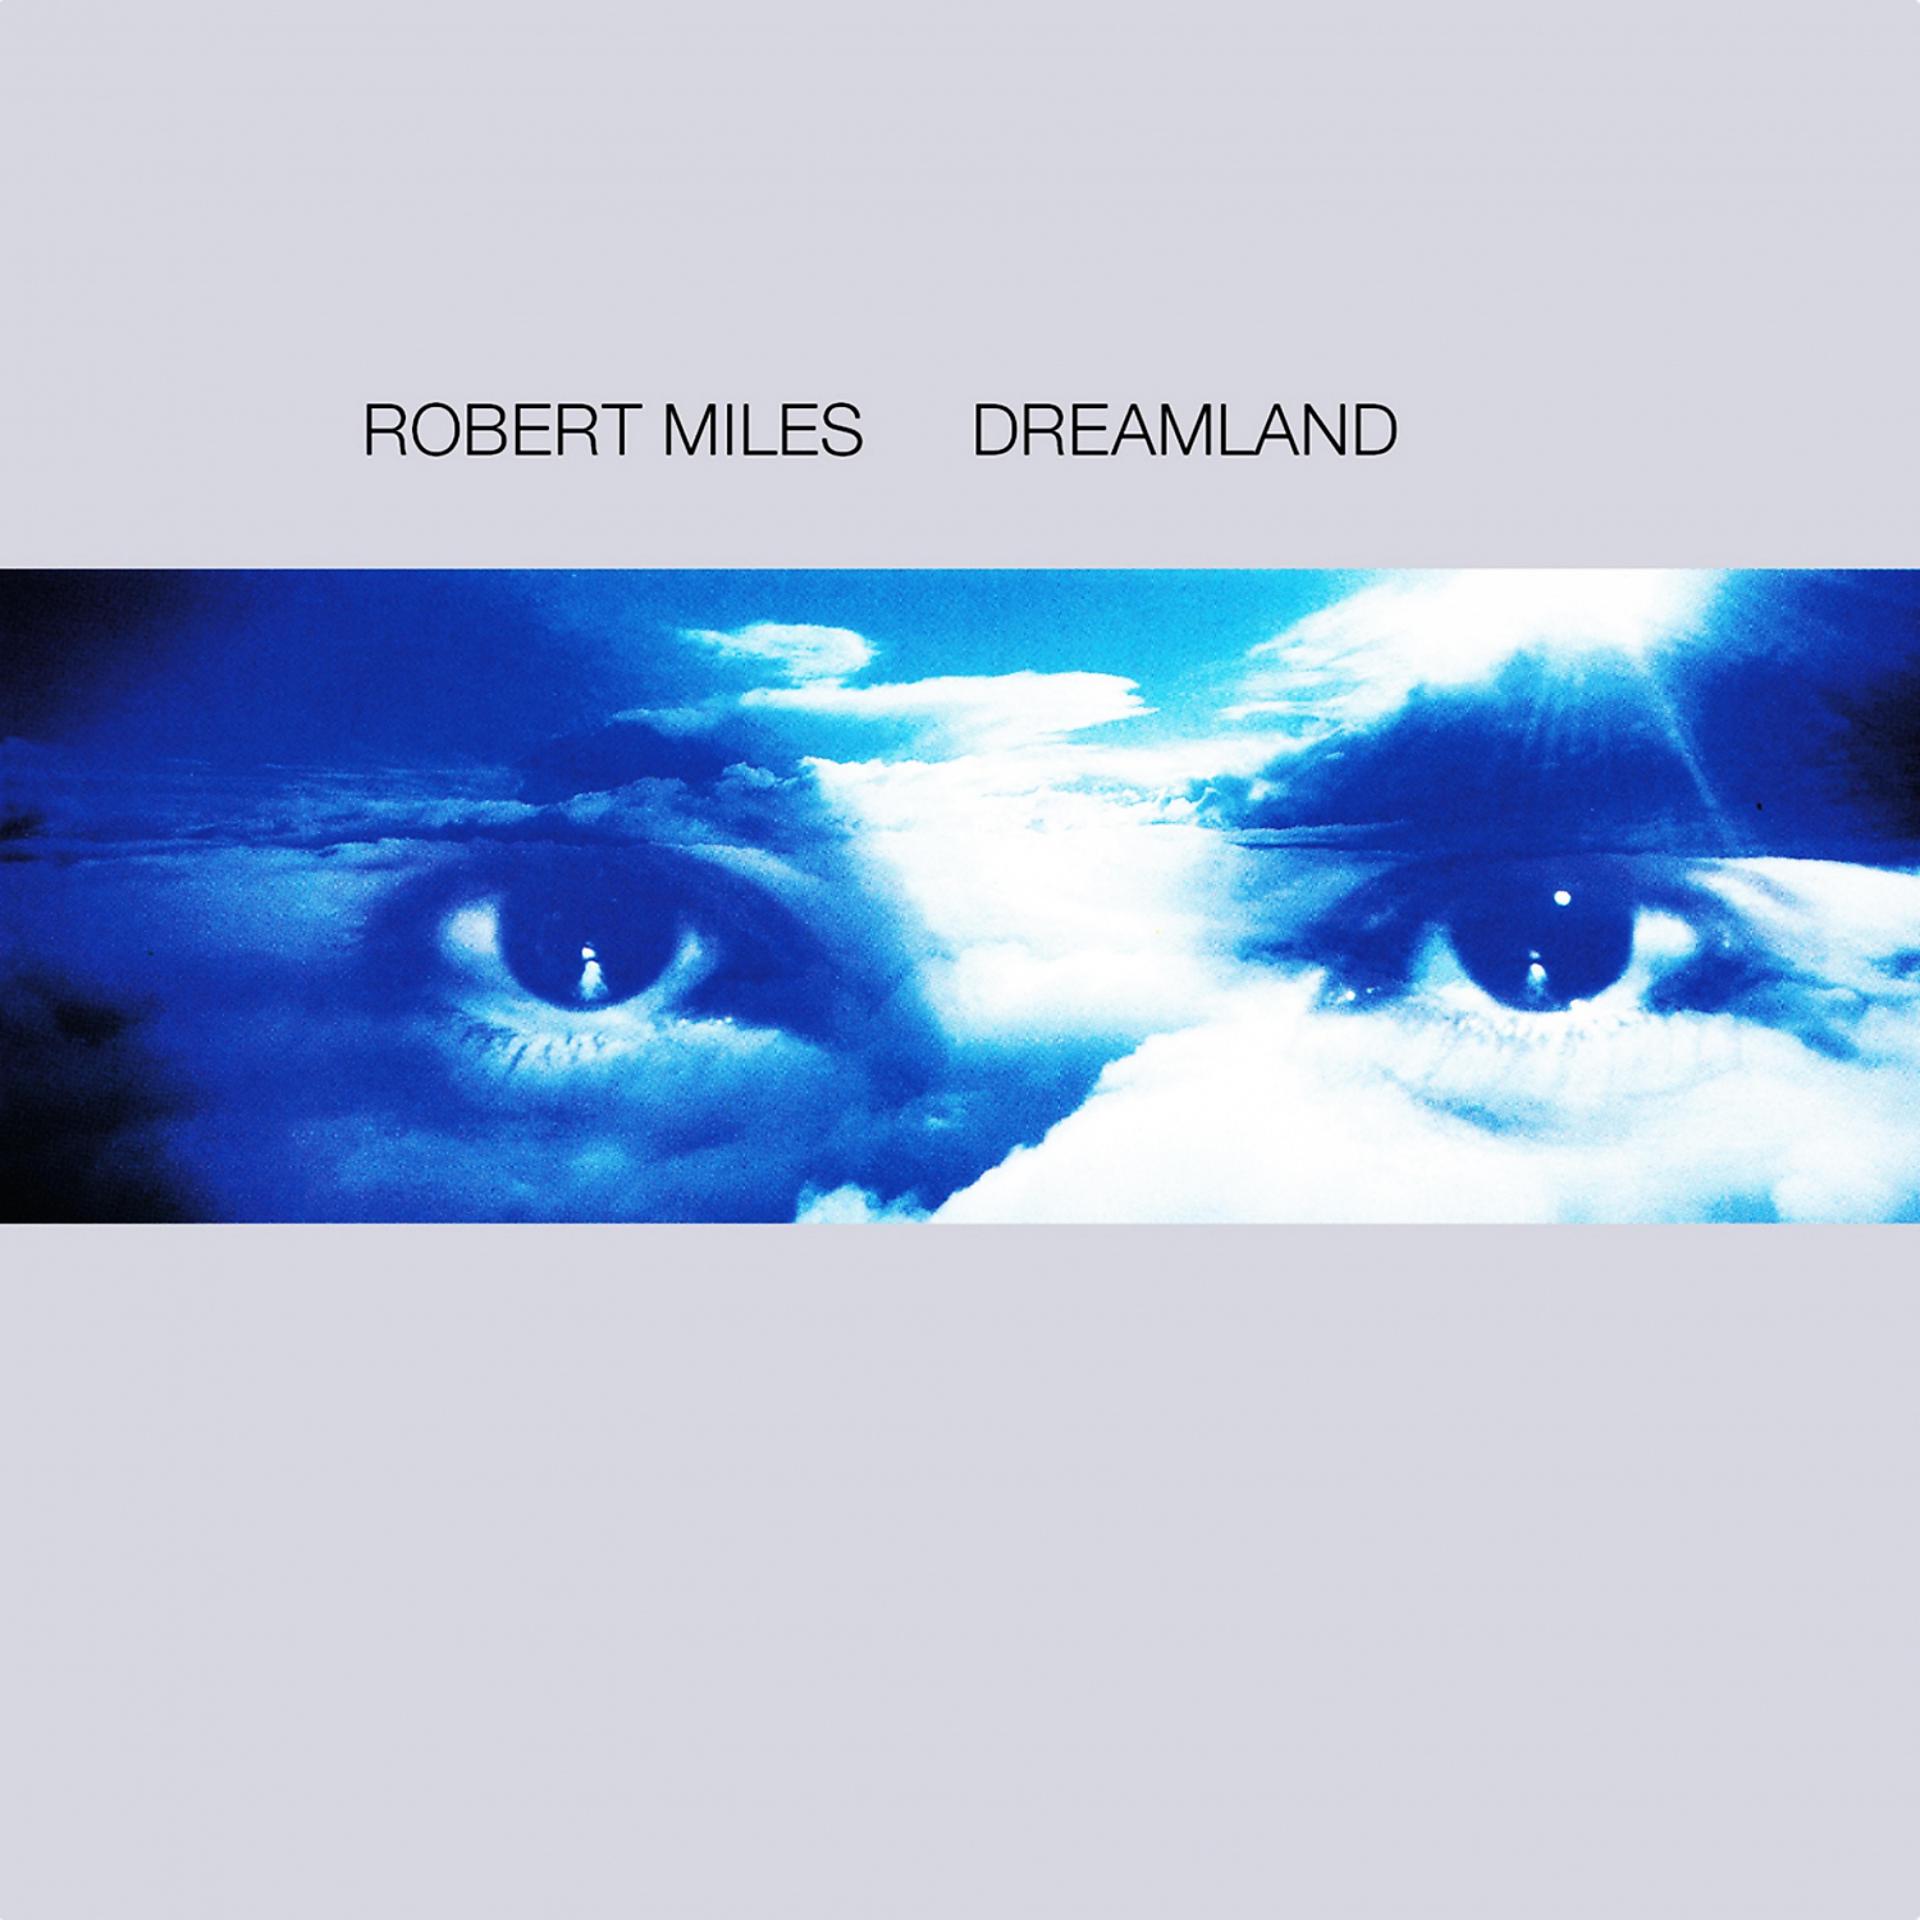 Robert Miles children 1996. Robert Miles Dreamland 1996. Robert Miles - Dreamland (1996) компакт диск. Robert miles dreaming